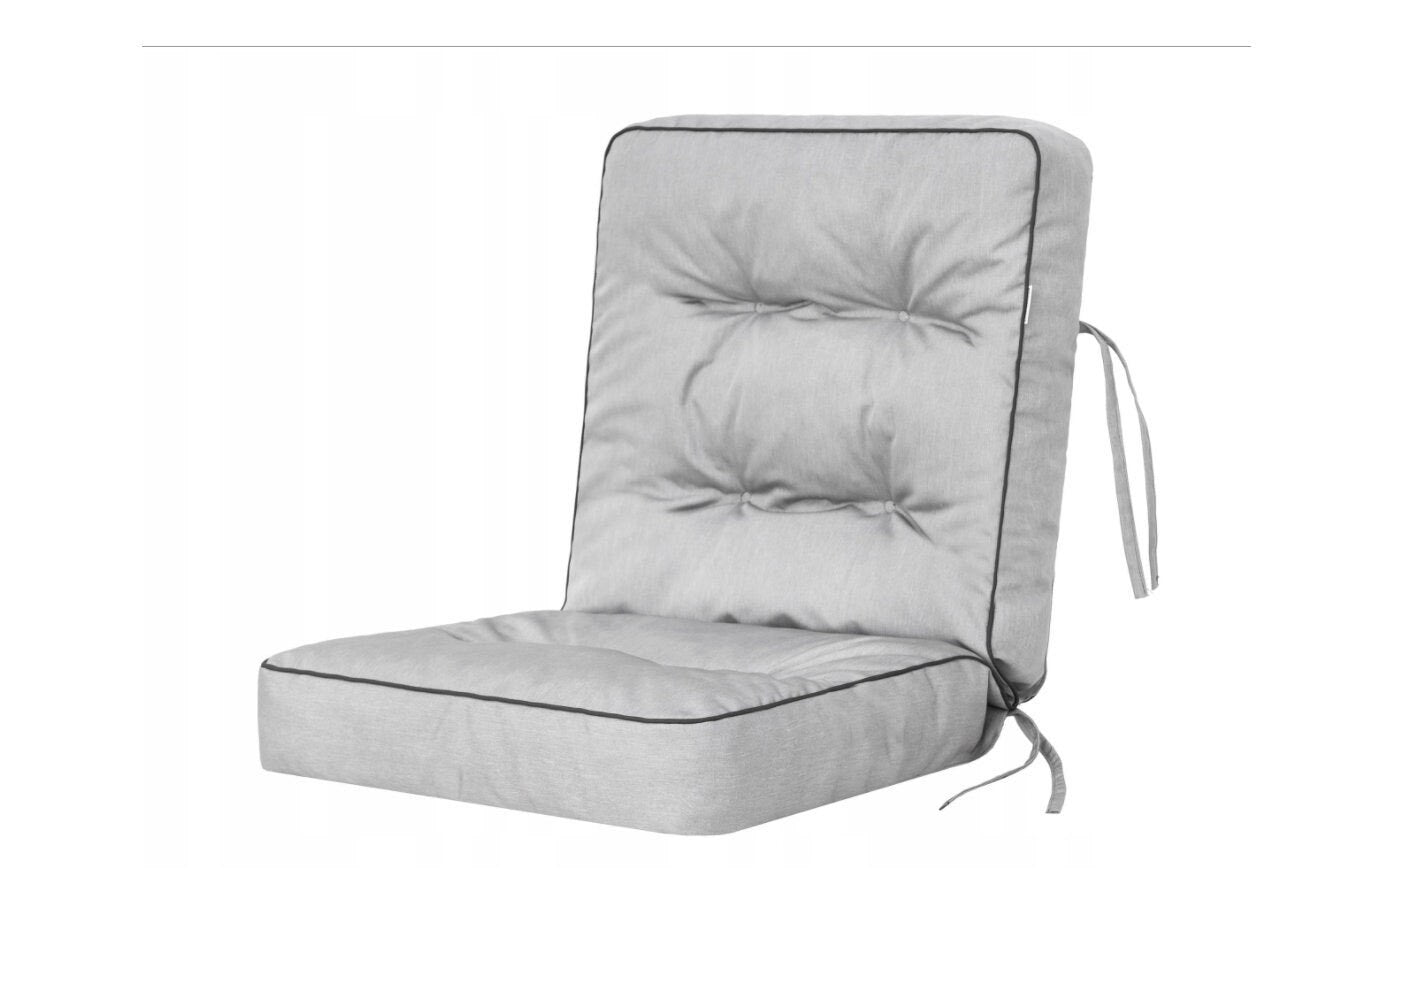 chair pillow, swing cushion, 50x60 cm, pillow for a garden deckchair, Waterproof cushion, patio, various colors